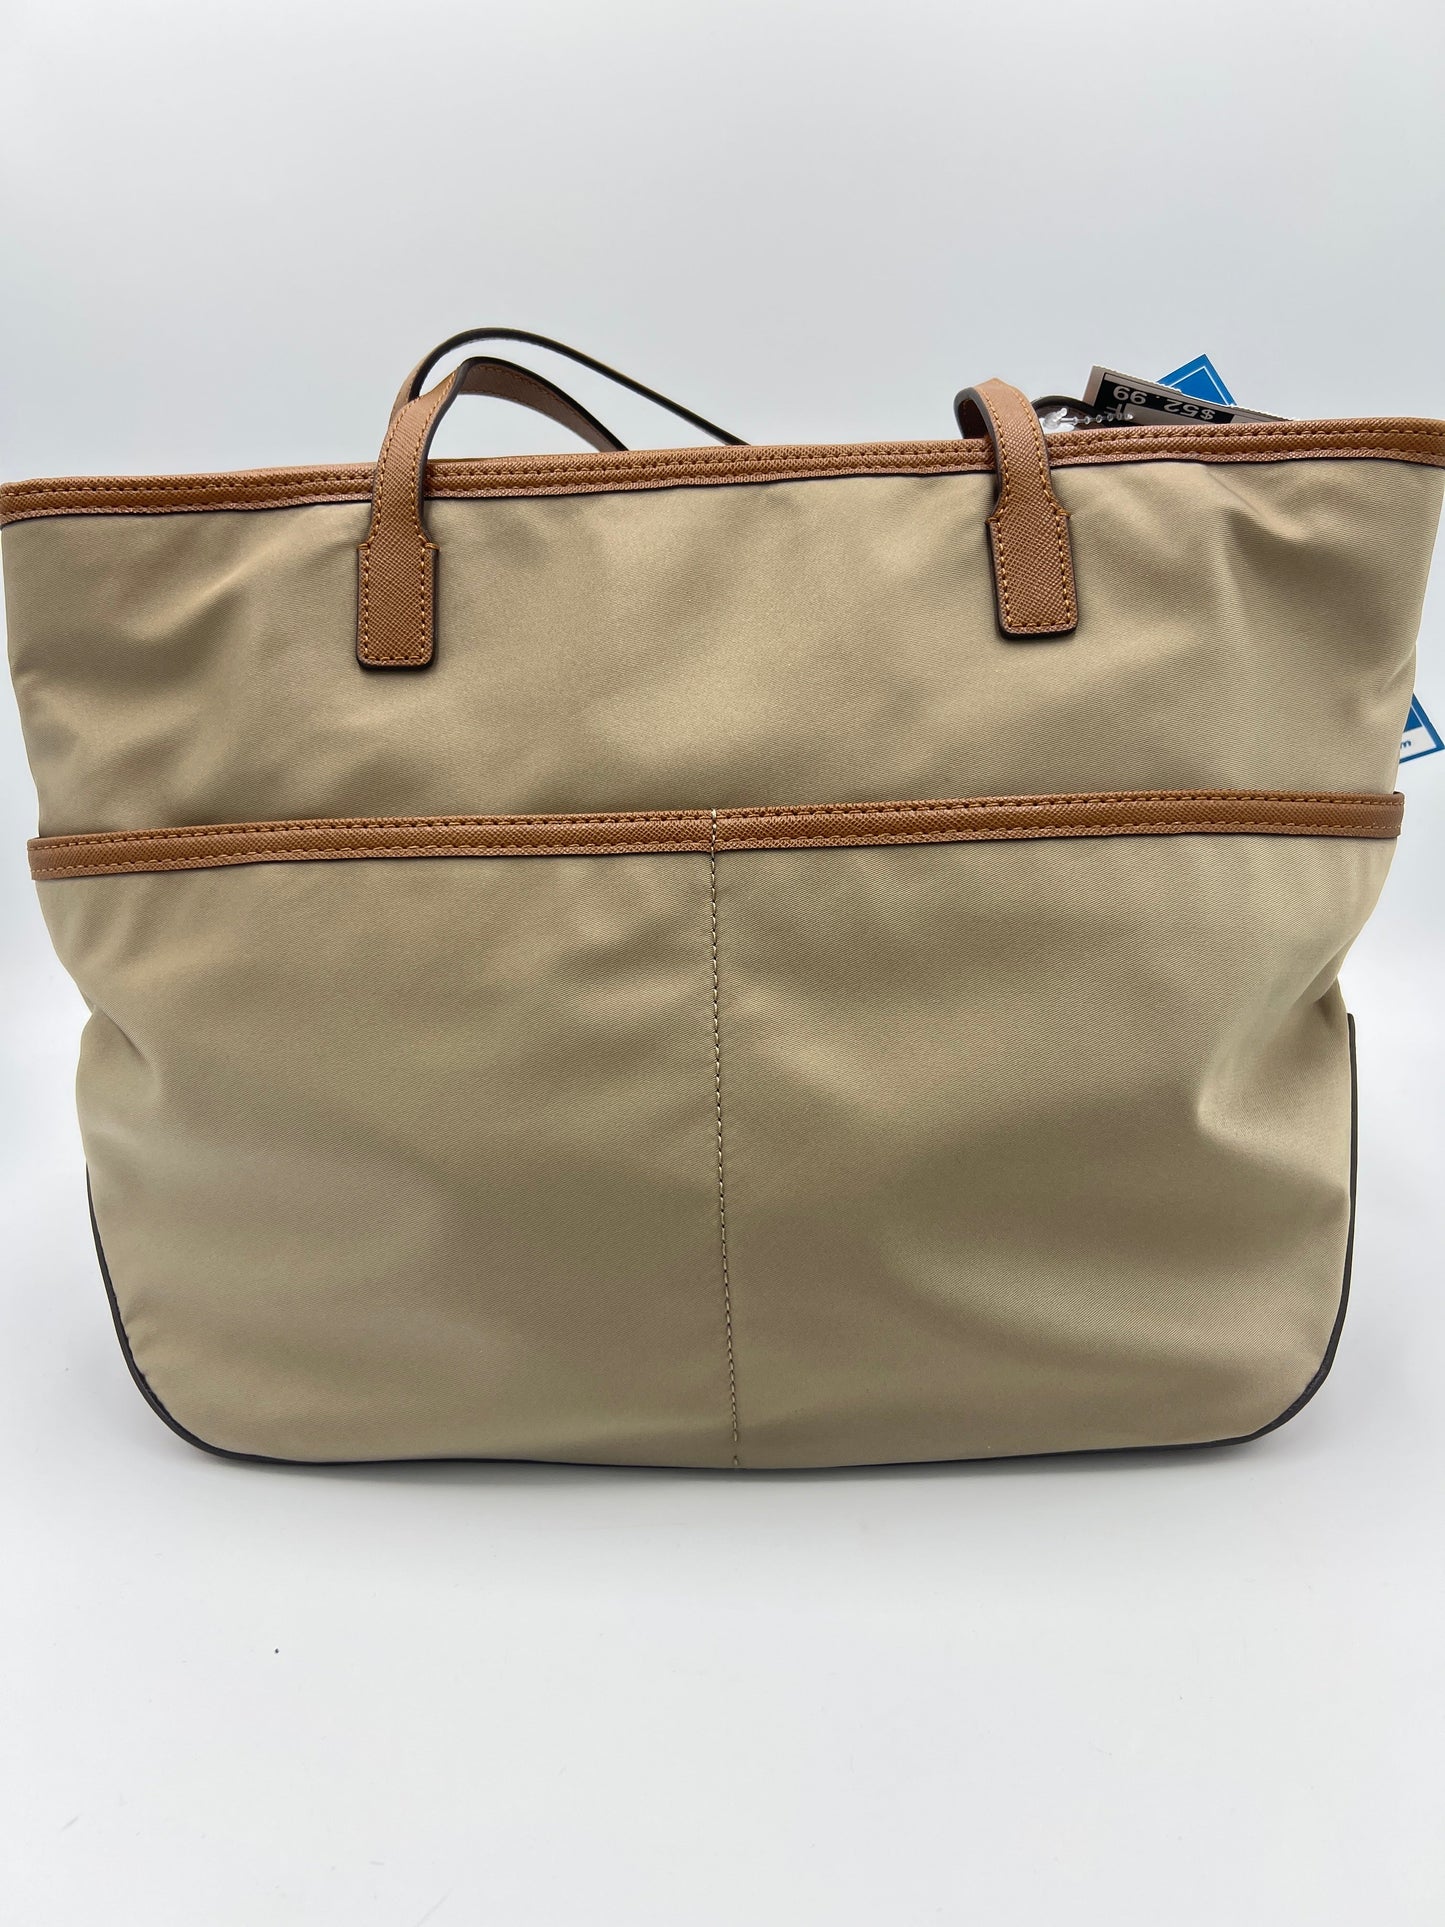 Handbag Designer Michael Kors